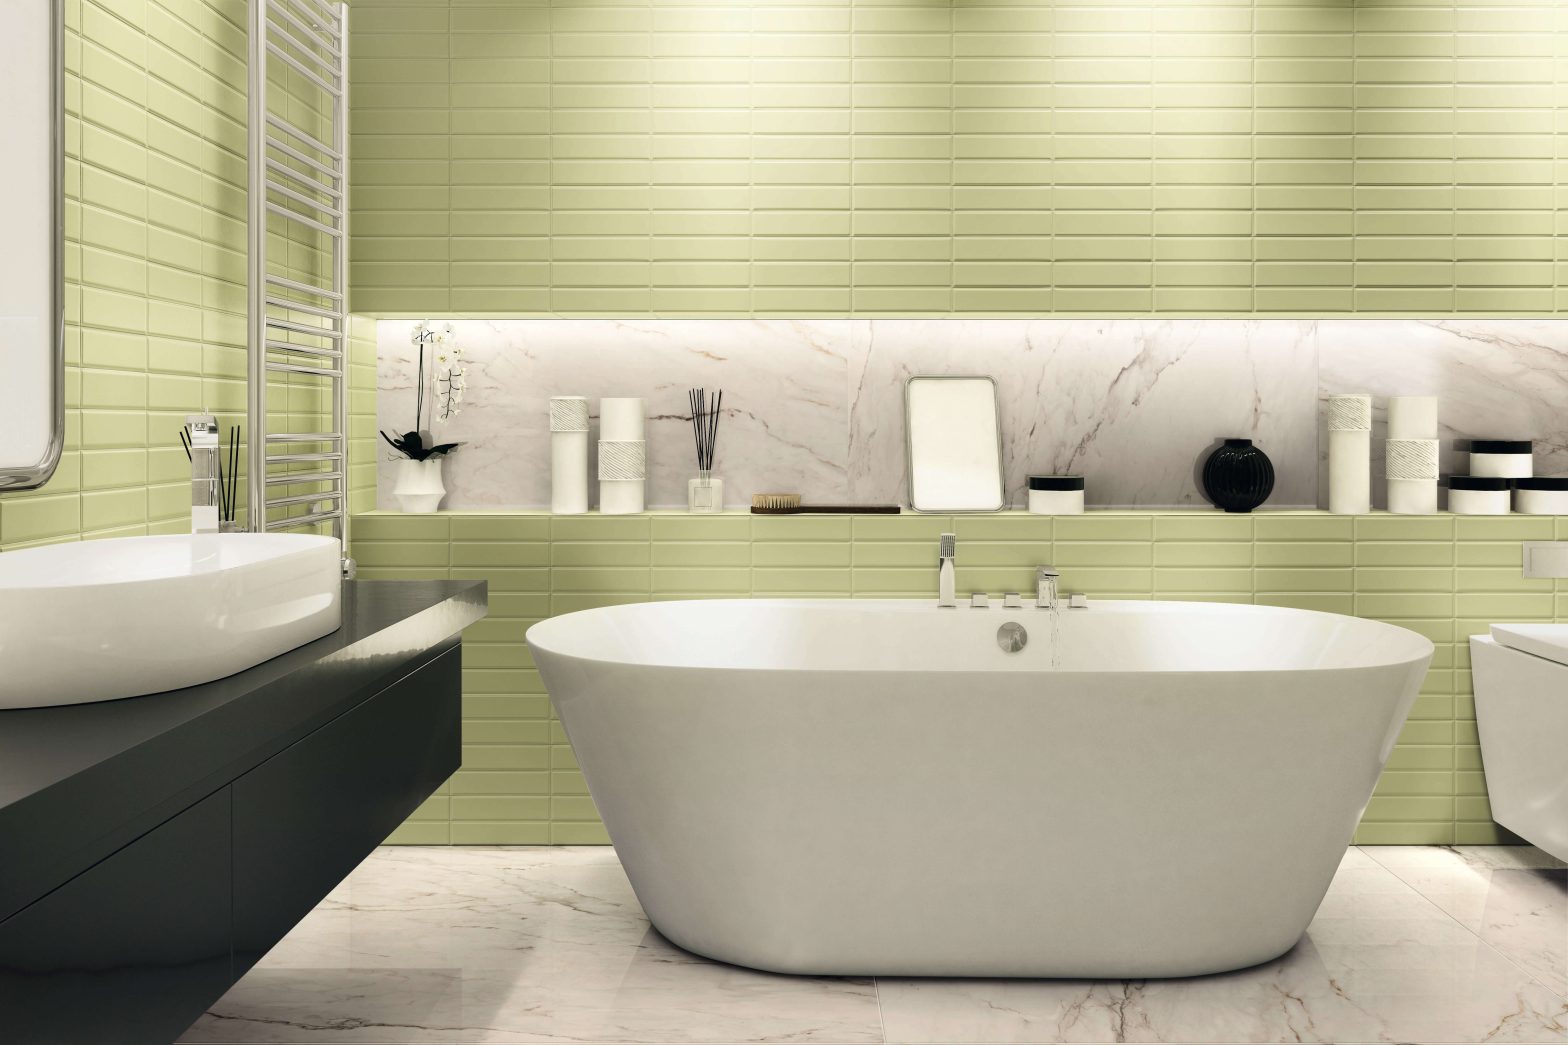 A lime-green bathroom with a modern tub